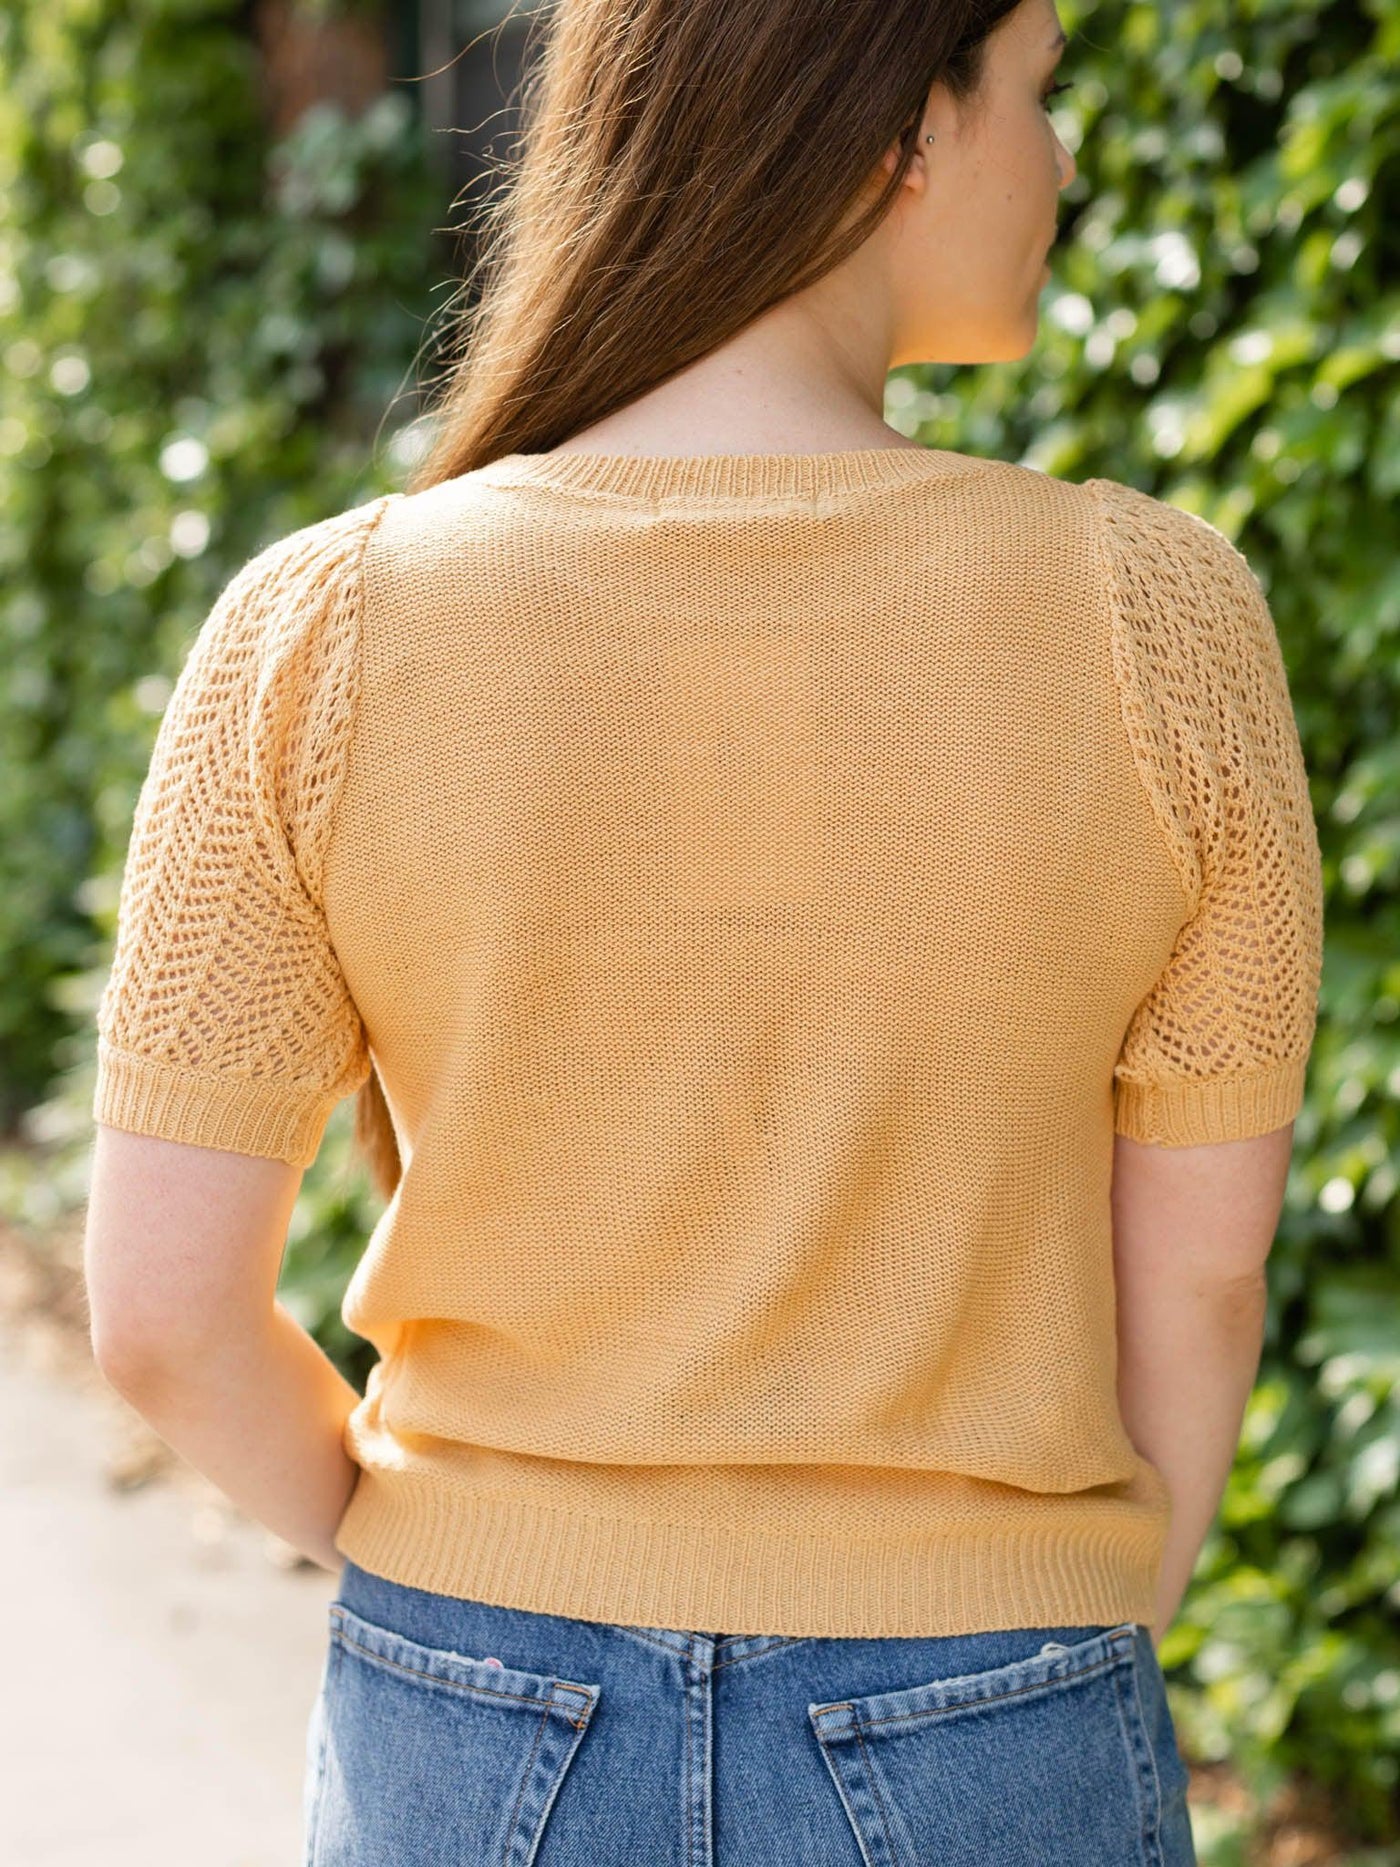 open knit yellow sweater